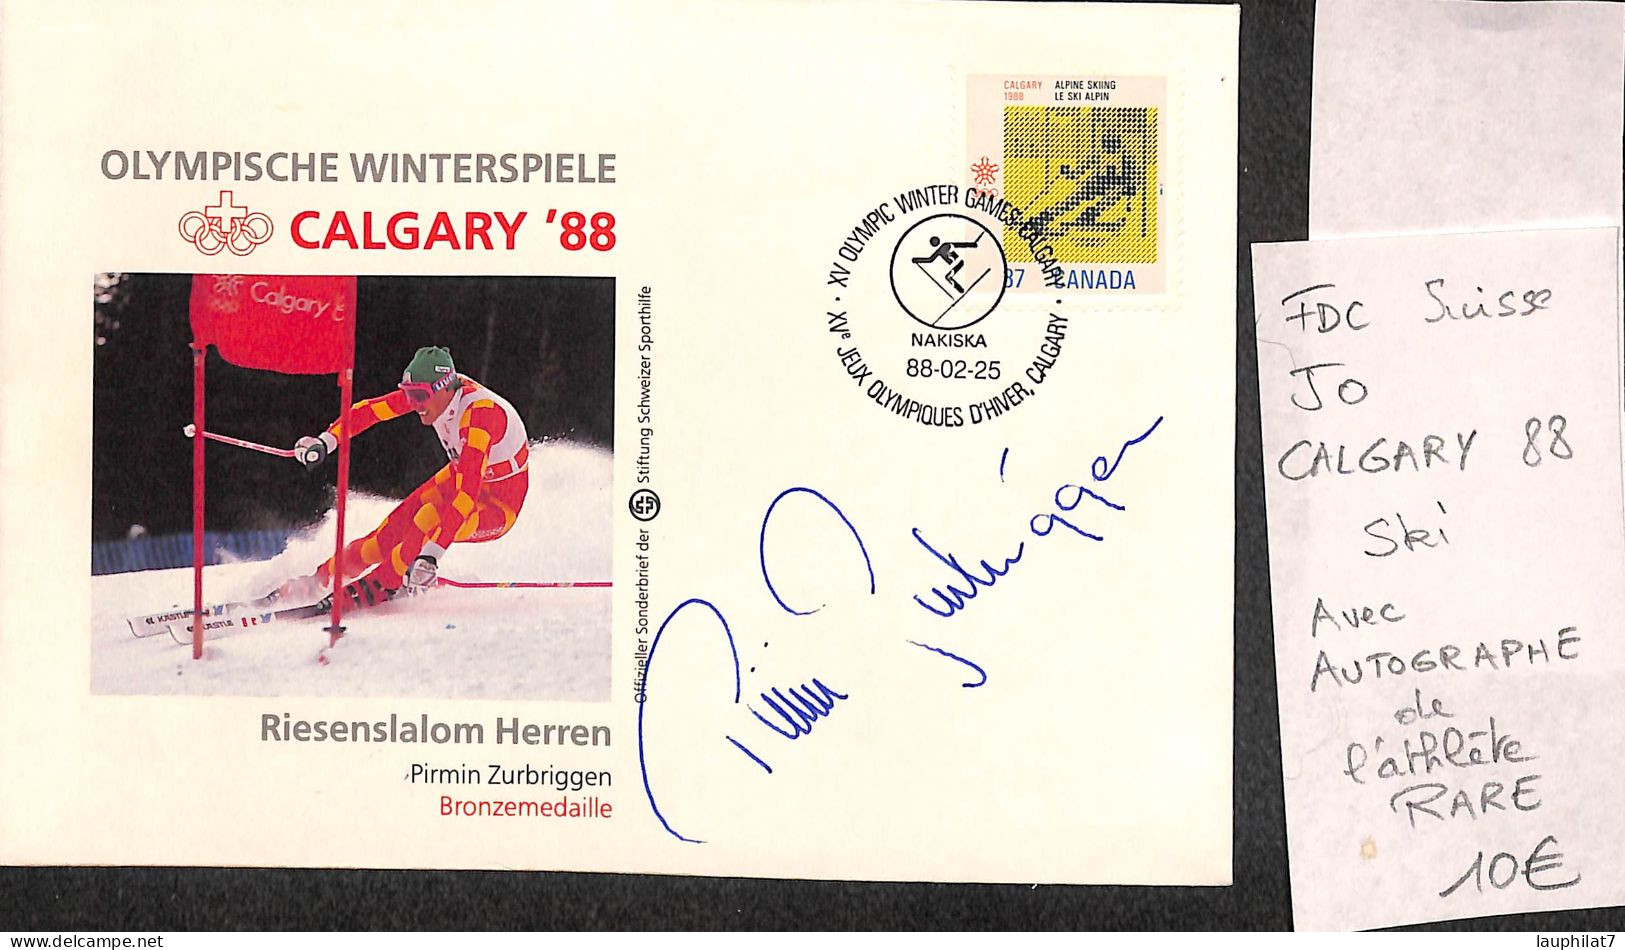 [900095]TB//-Suisse 1988 - FDC, Documents, Pirmin Zurbriggen, Calgary, Avec Autographe De L'athlète, RARE, Jeux Olympiq - Invierno 1988: Calgary